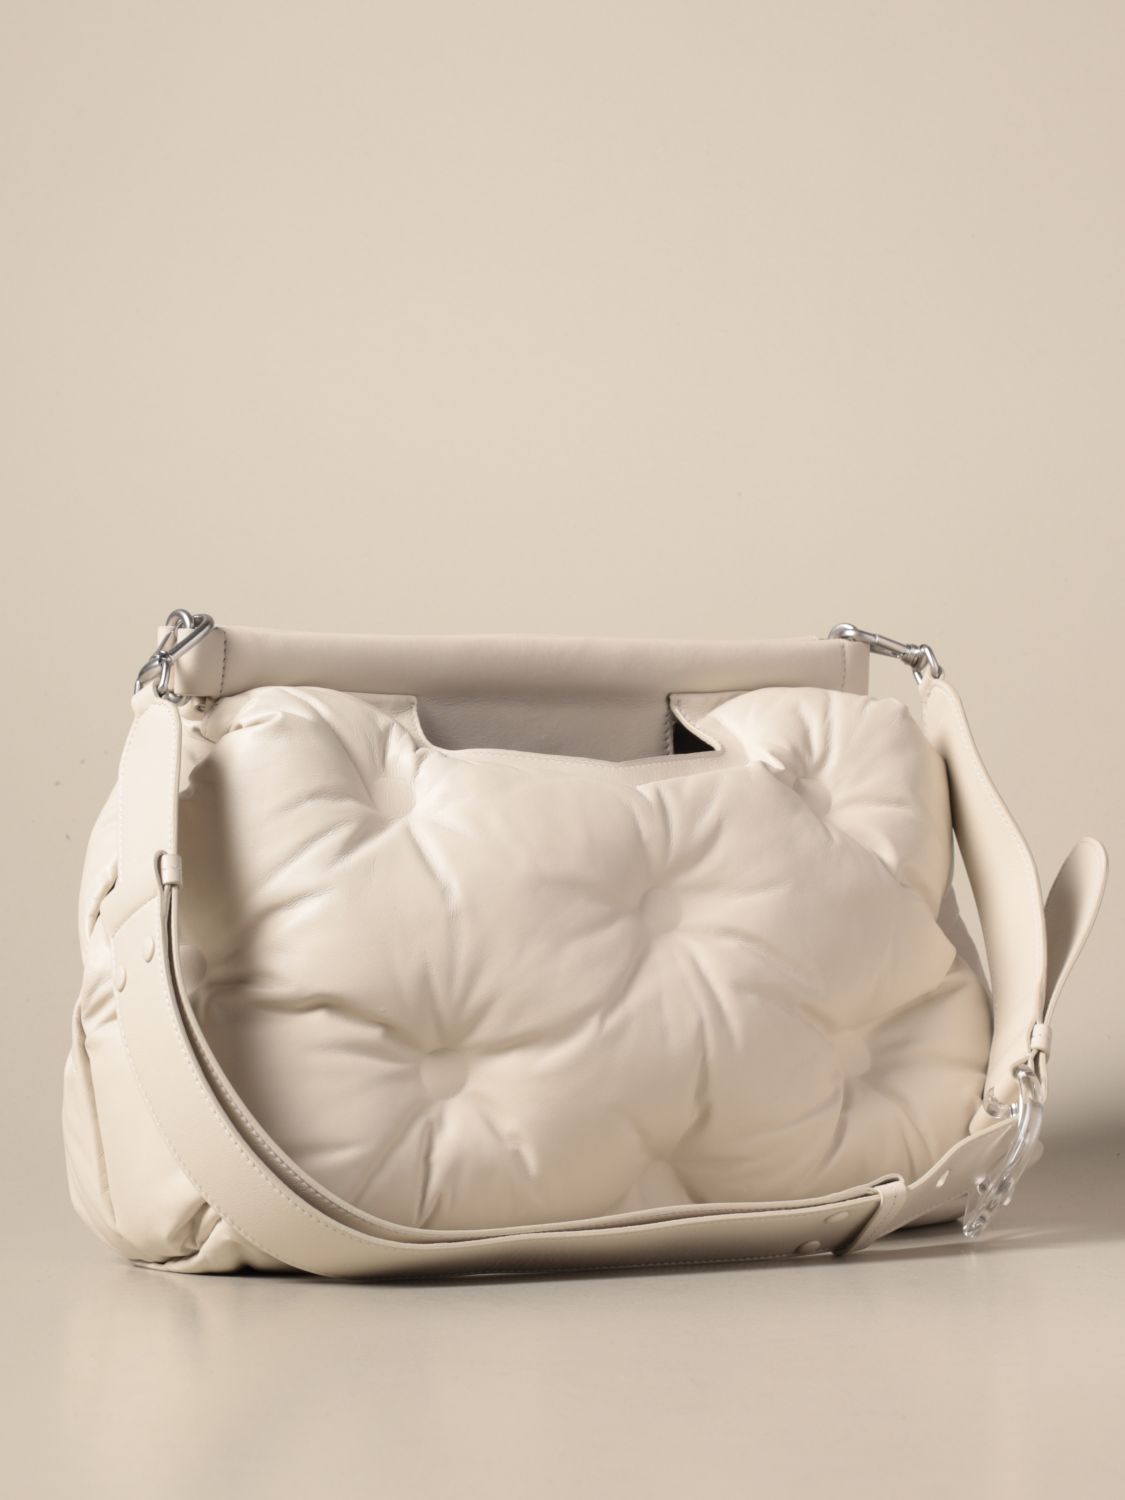 MAISON MARGIELA: Glam Slam padded bag | Handbag Maison Margiela Women